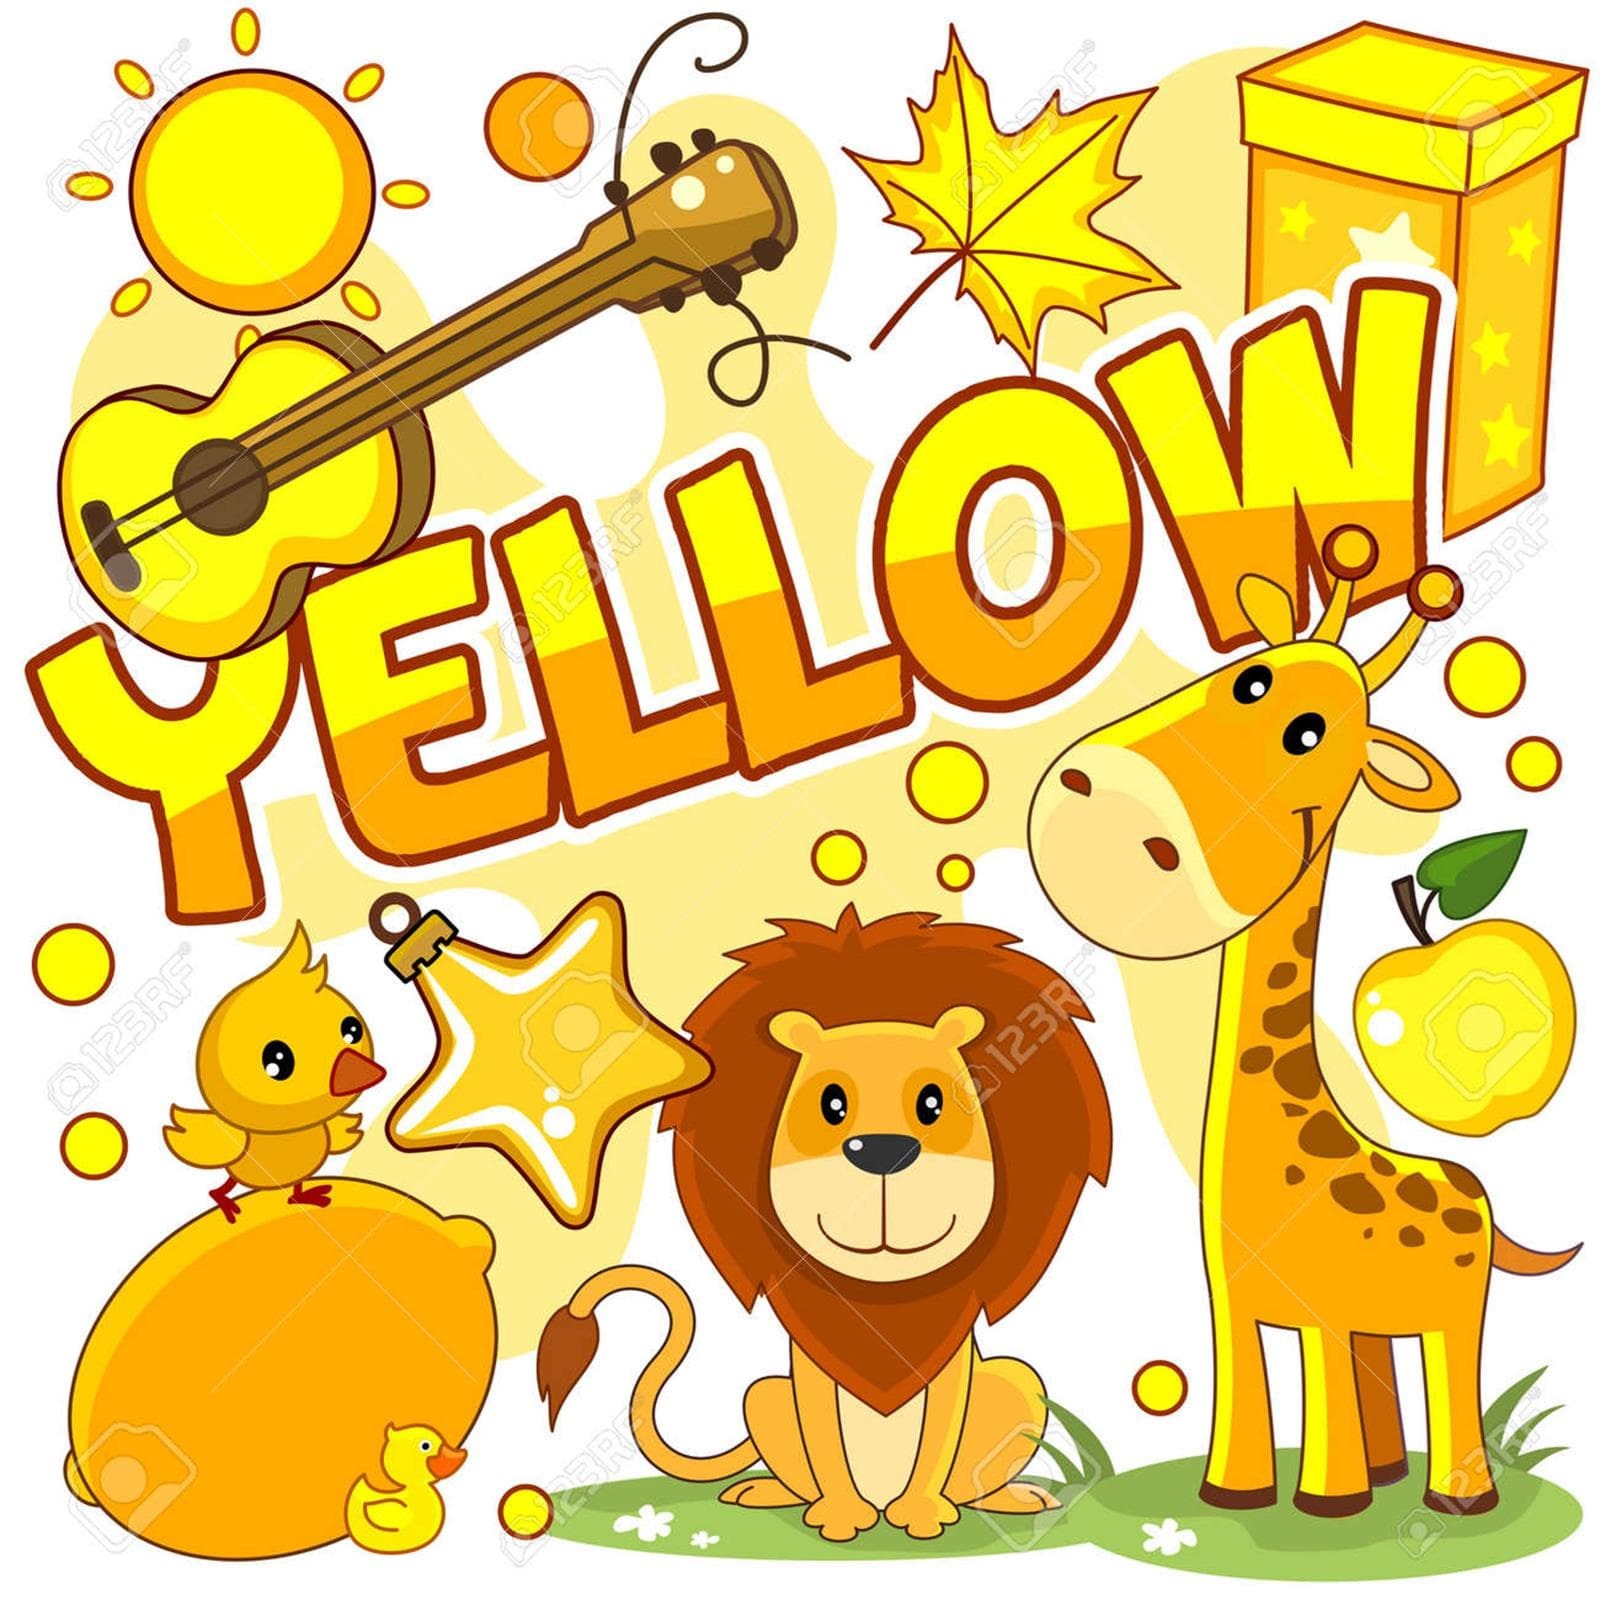 Yellow - Imagen 1